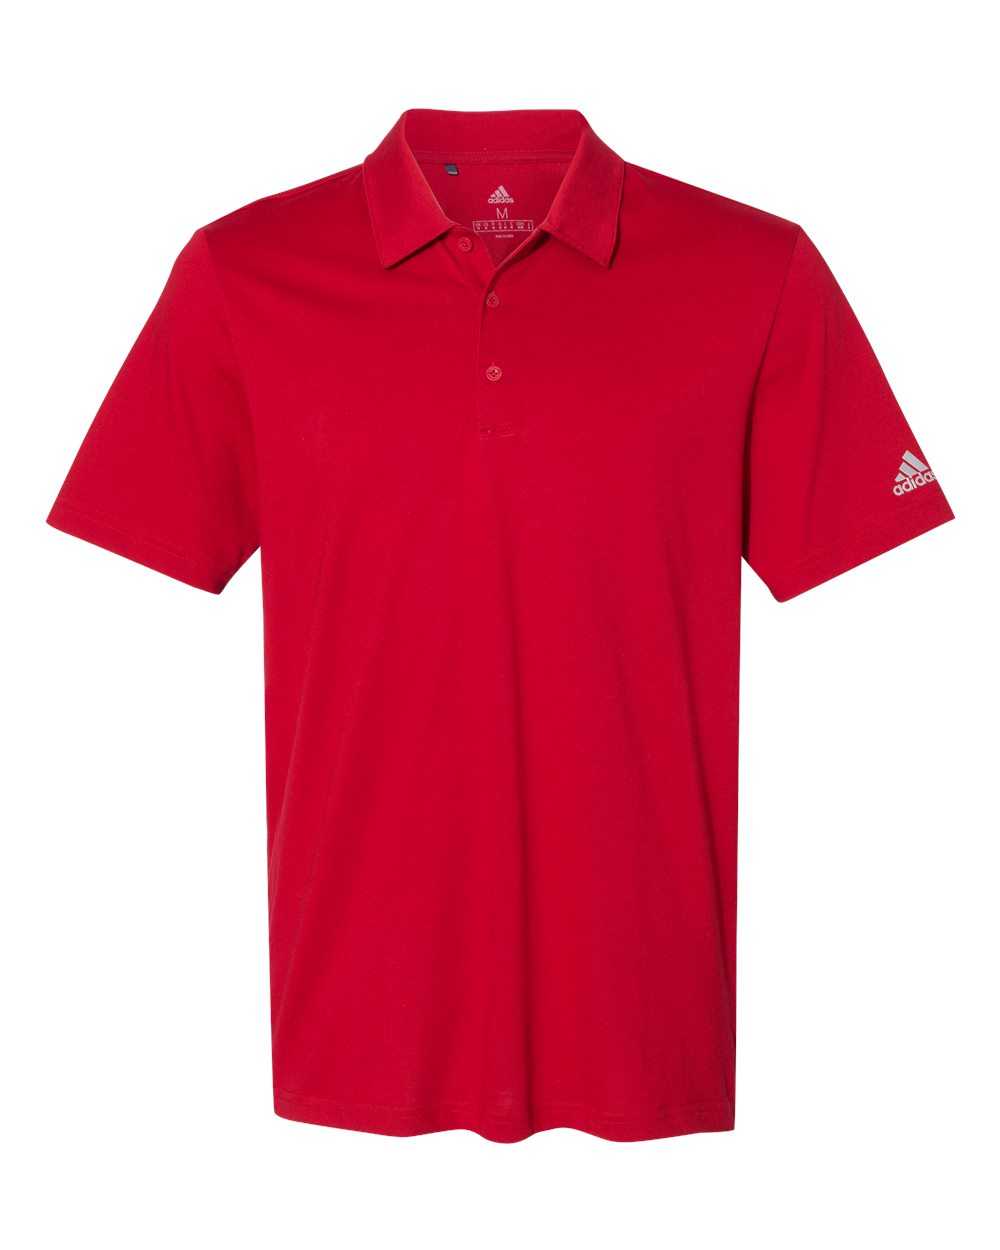 Adidas A322 Cotton Blend Sport Shirt - Power Red - HIT a Double